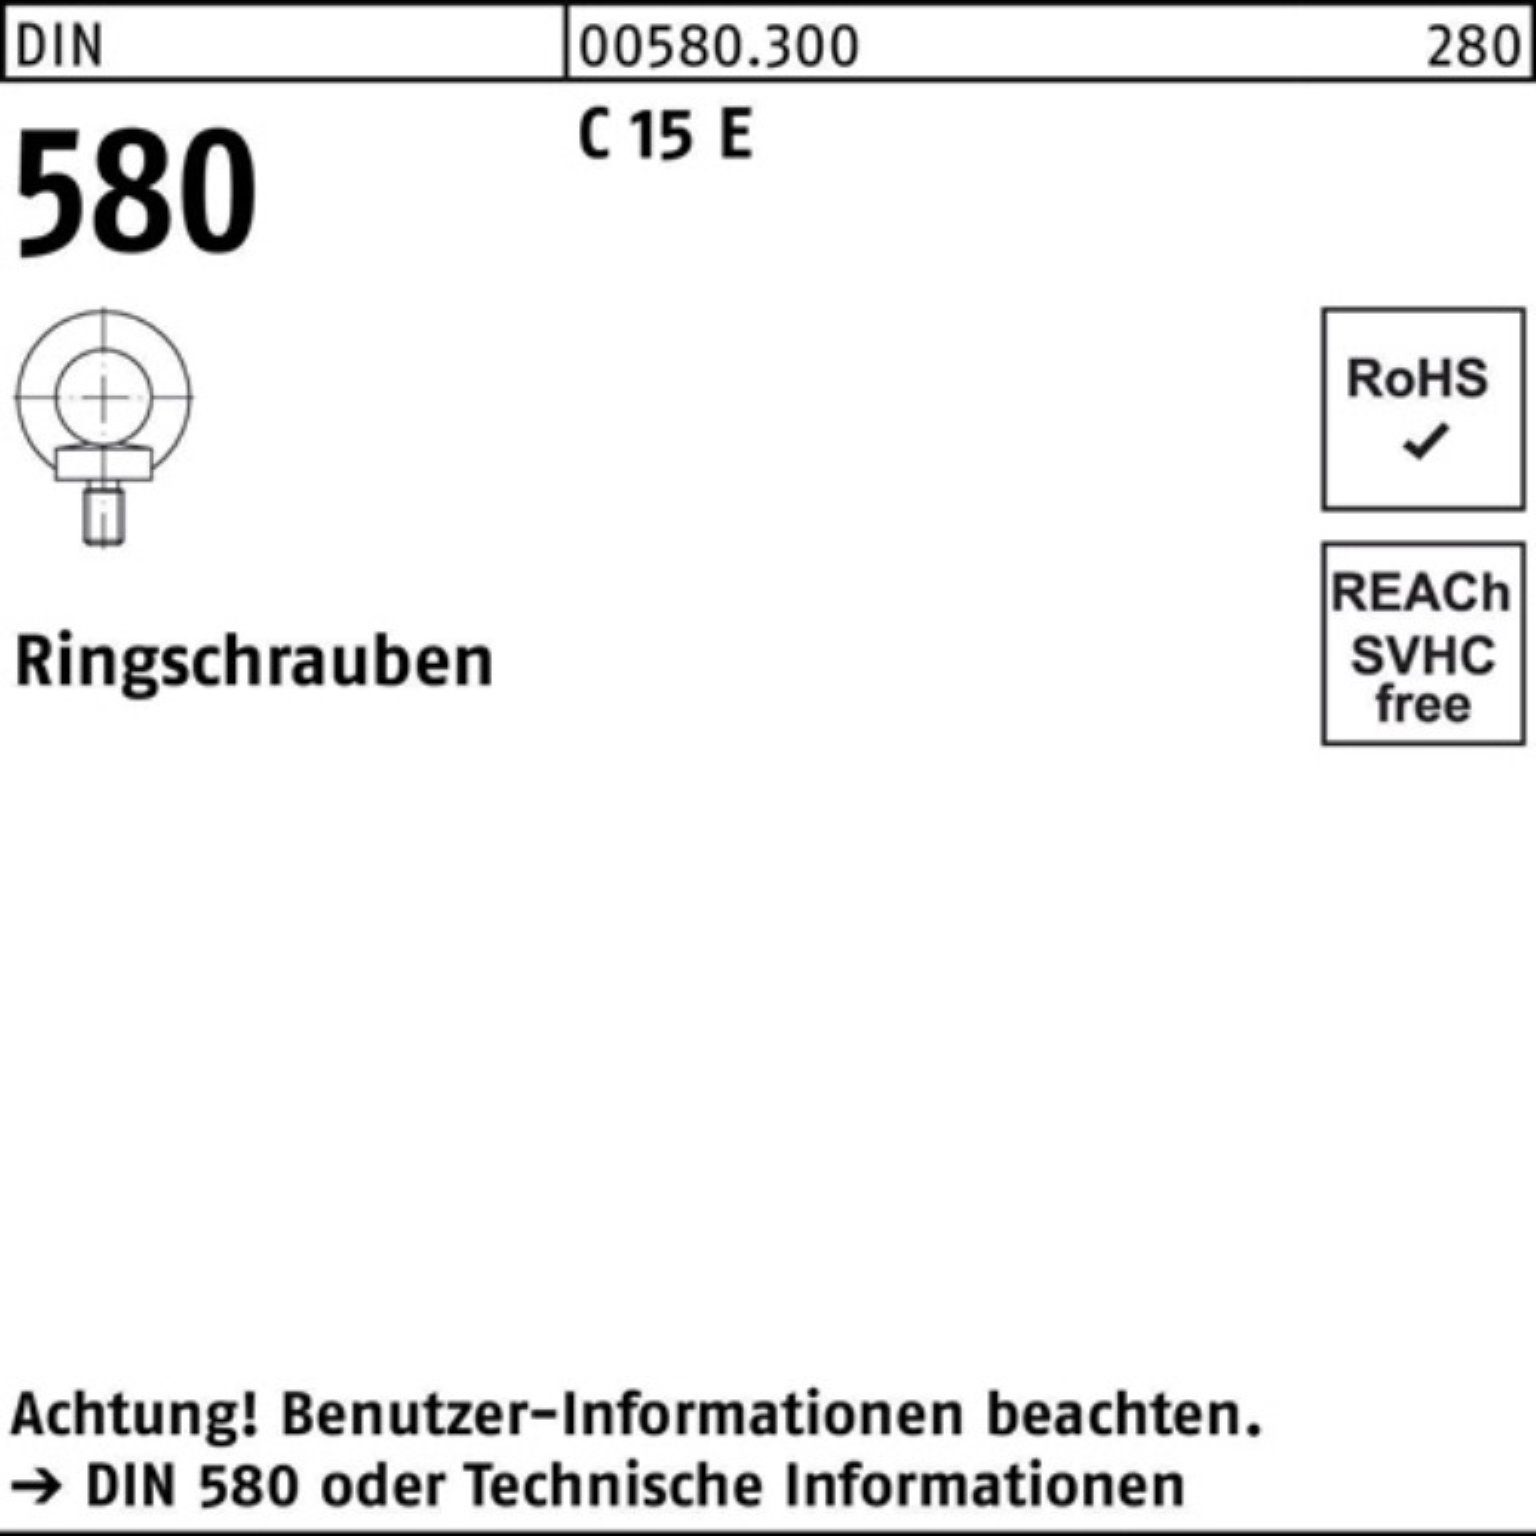 Reyher Schraube 100er Pack Ringschraube DIN 580 M20 C 15 E 1 Stück DIN 580 C 15 E Rin